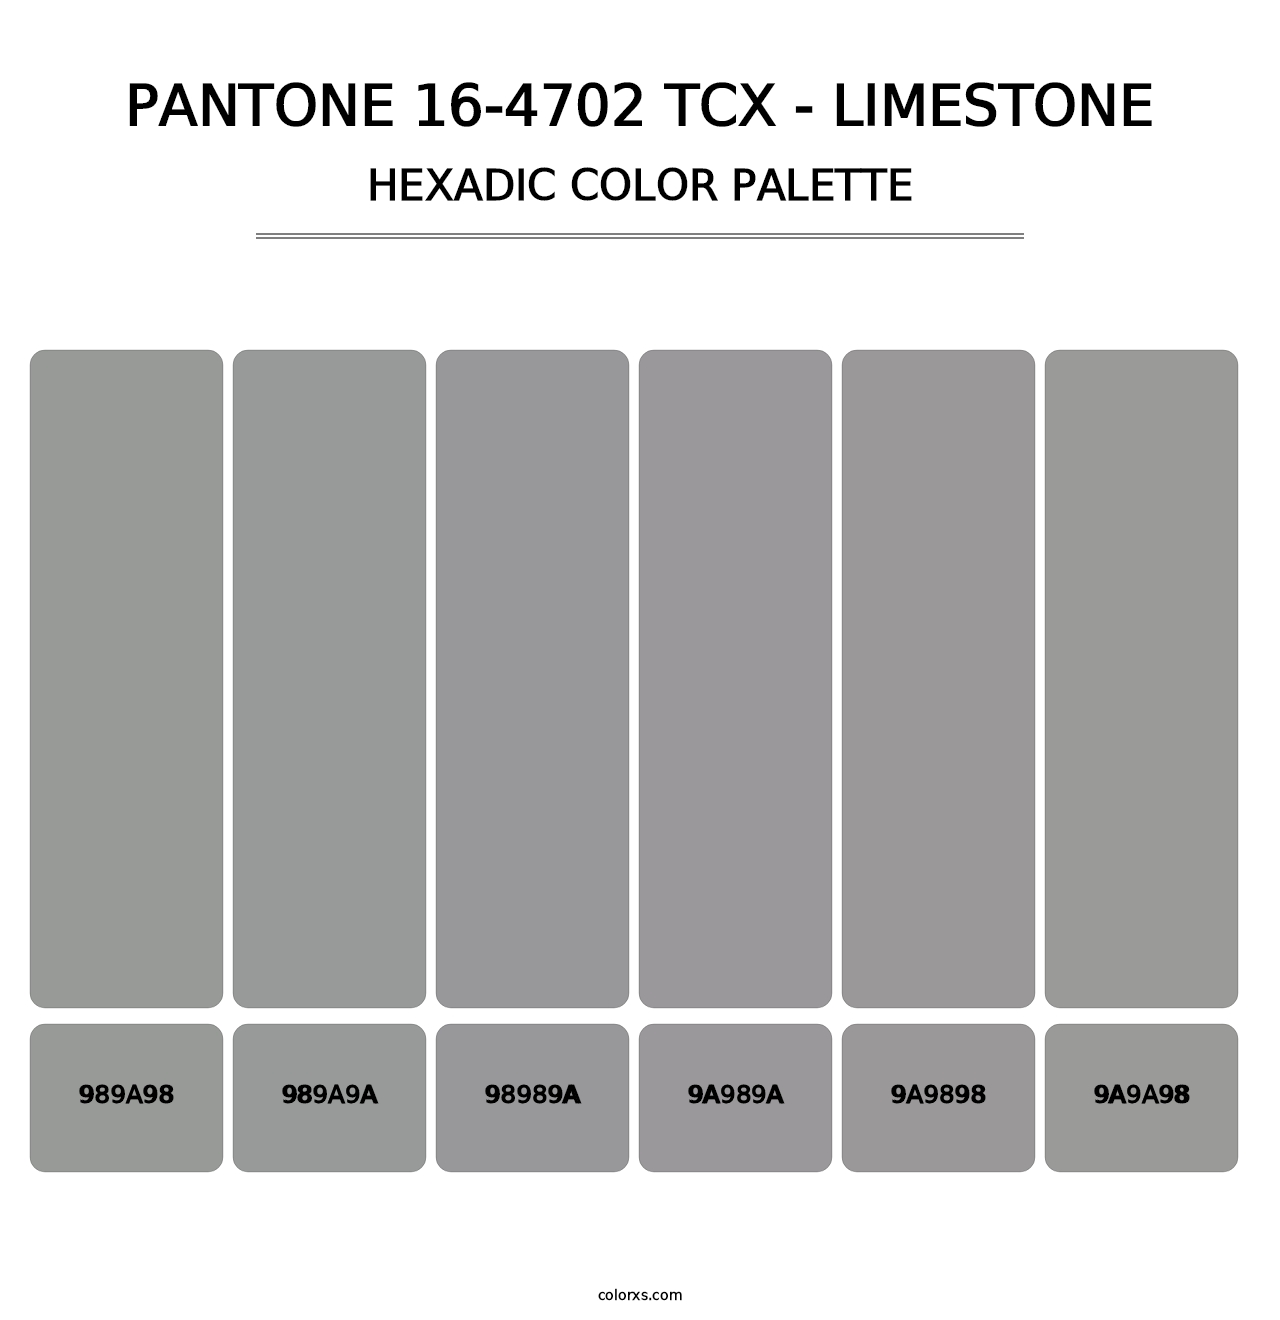 PANTONE 16-4702 TCX - Limestone - Hexadic Color Palette